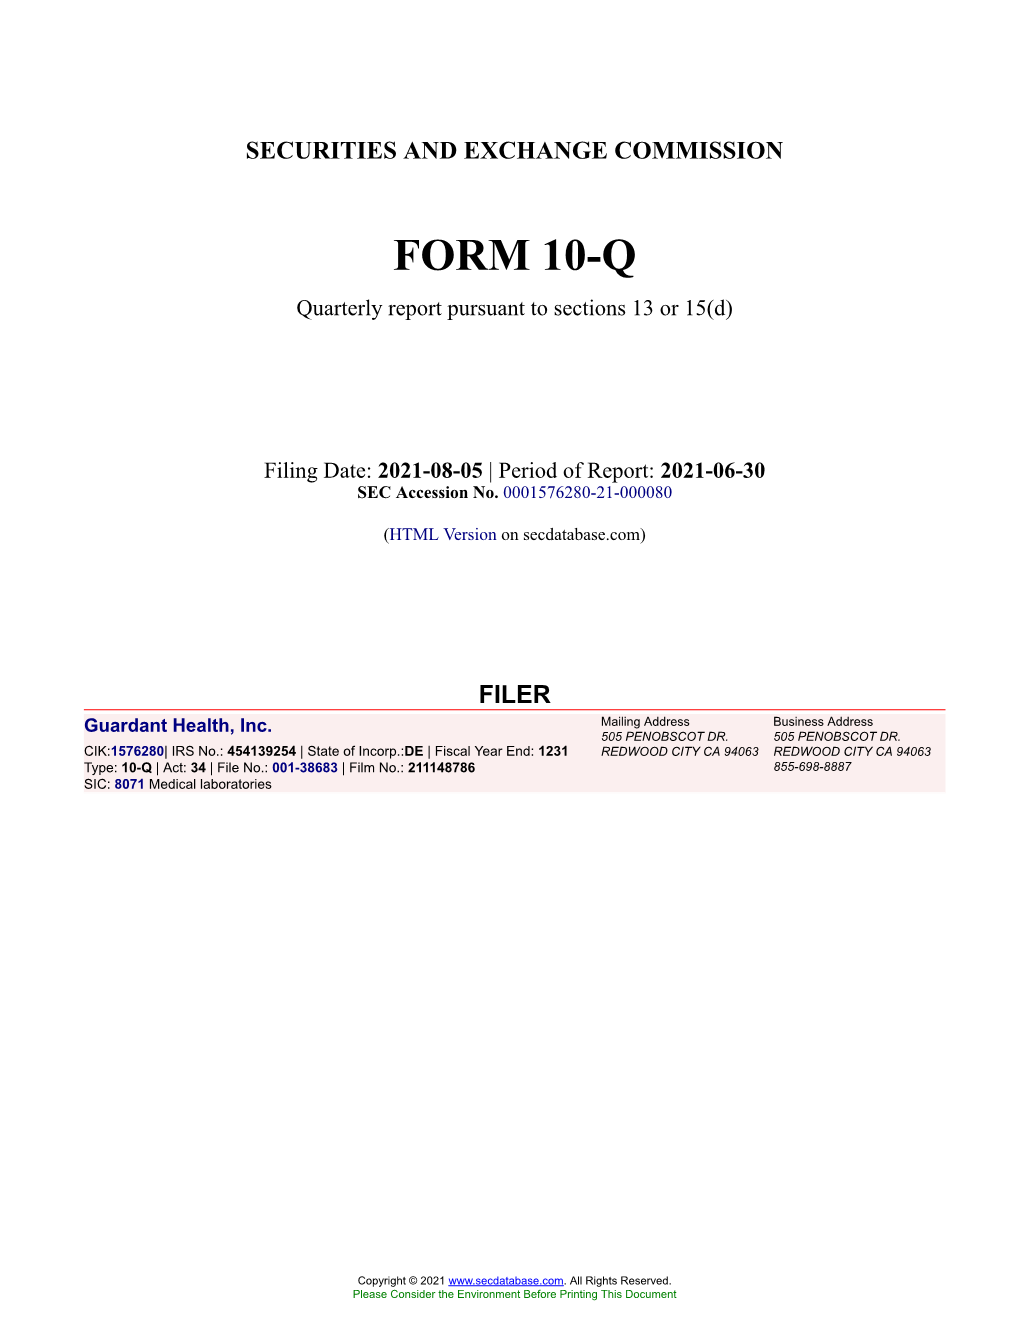 Guardant Health, Inc. Form 10-Q Quarterly Report Filed 2021-08-05